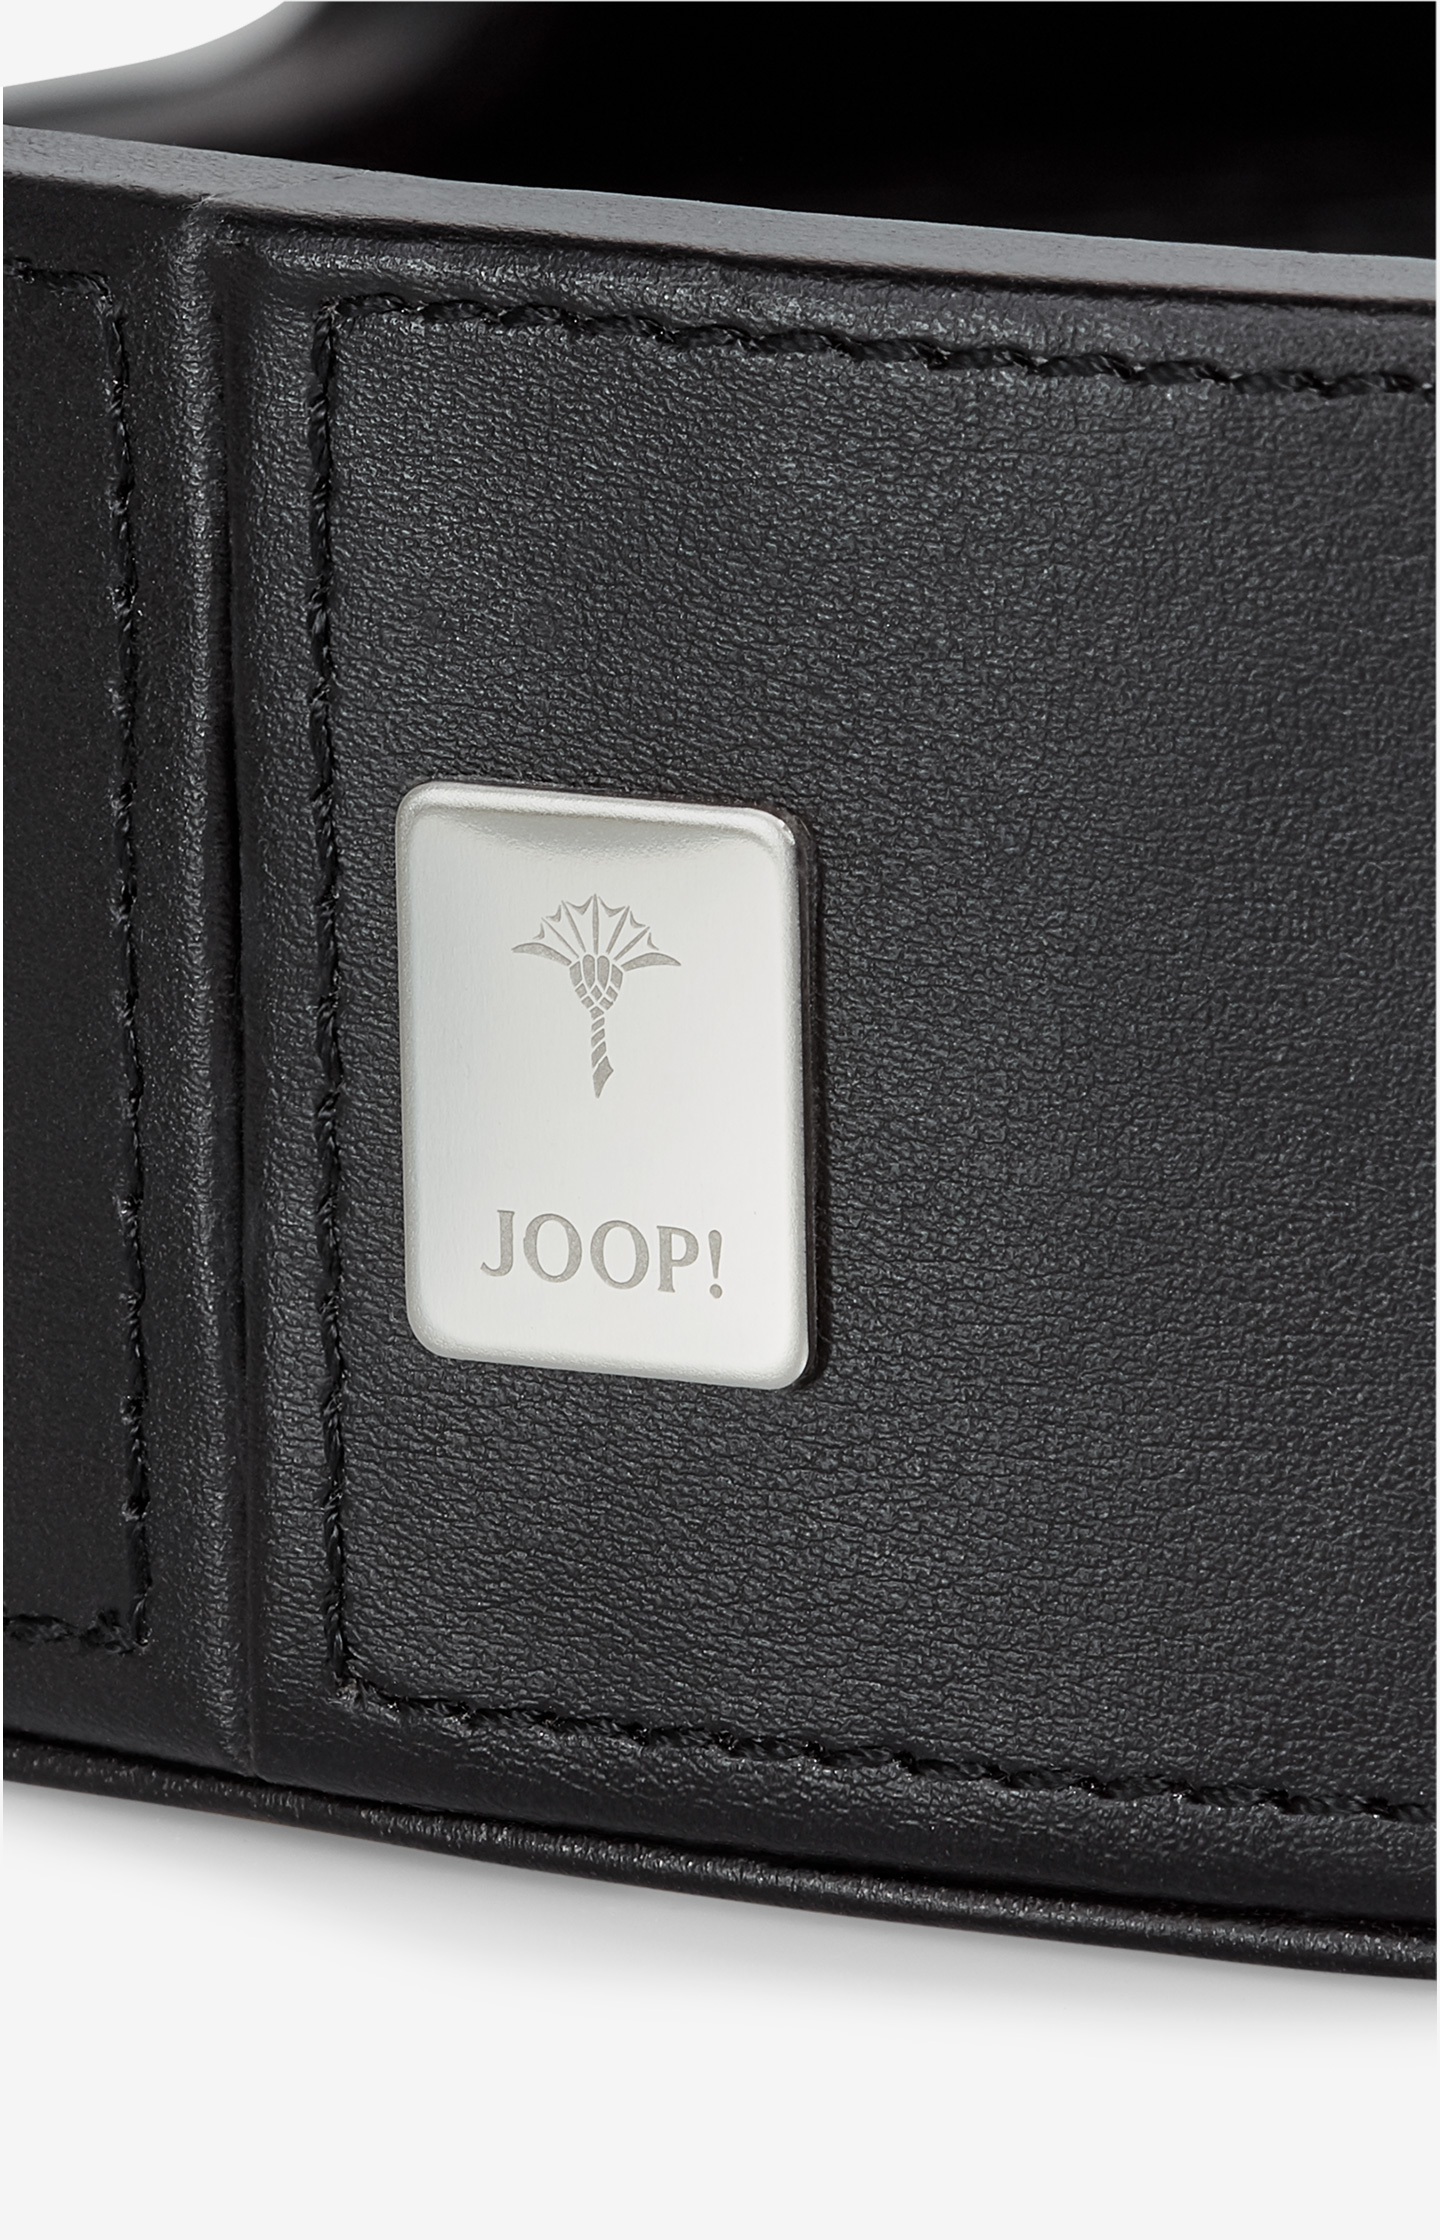 JOOP! Homeline - Rundes Tablett in Schwarz, klein - im JOOP! Online-Shop